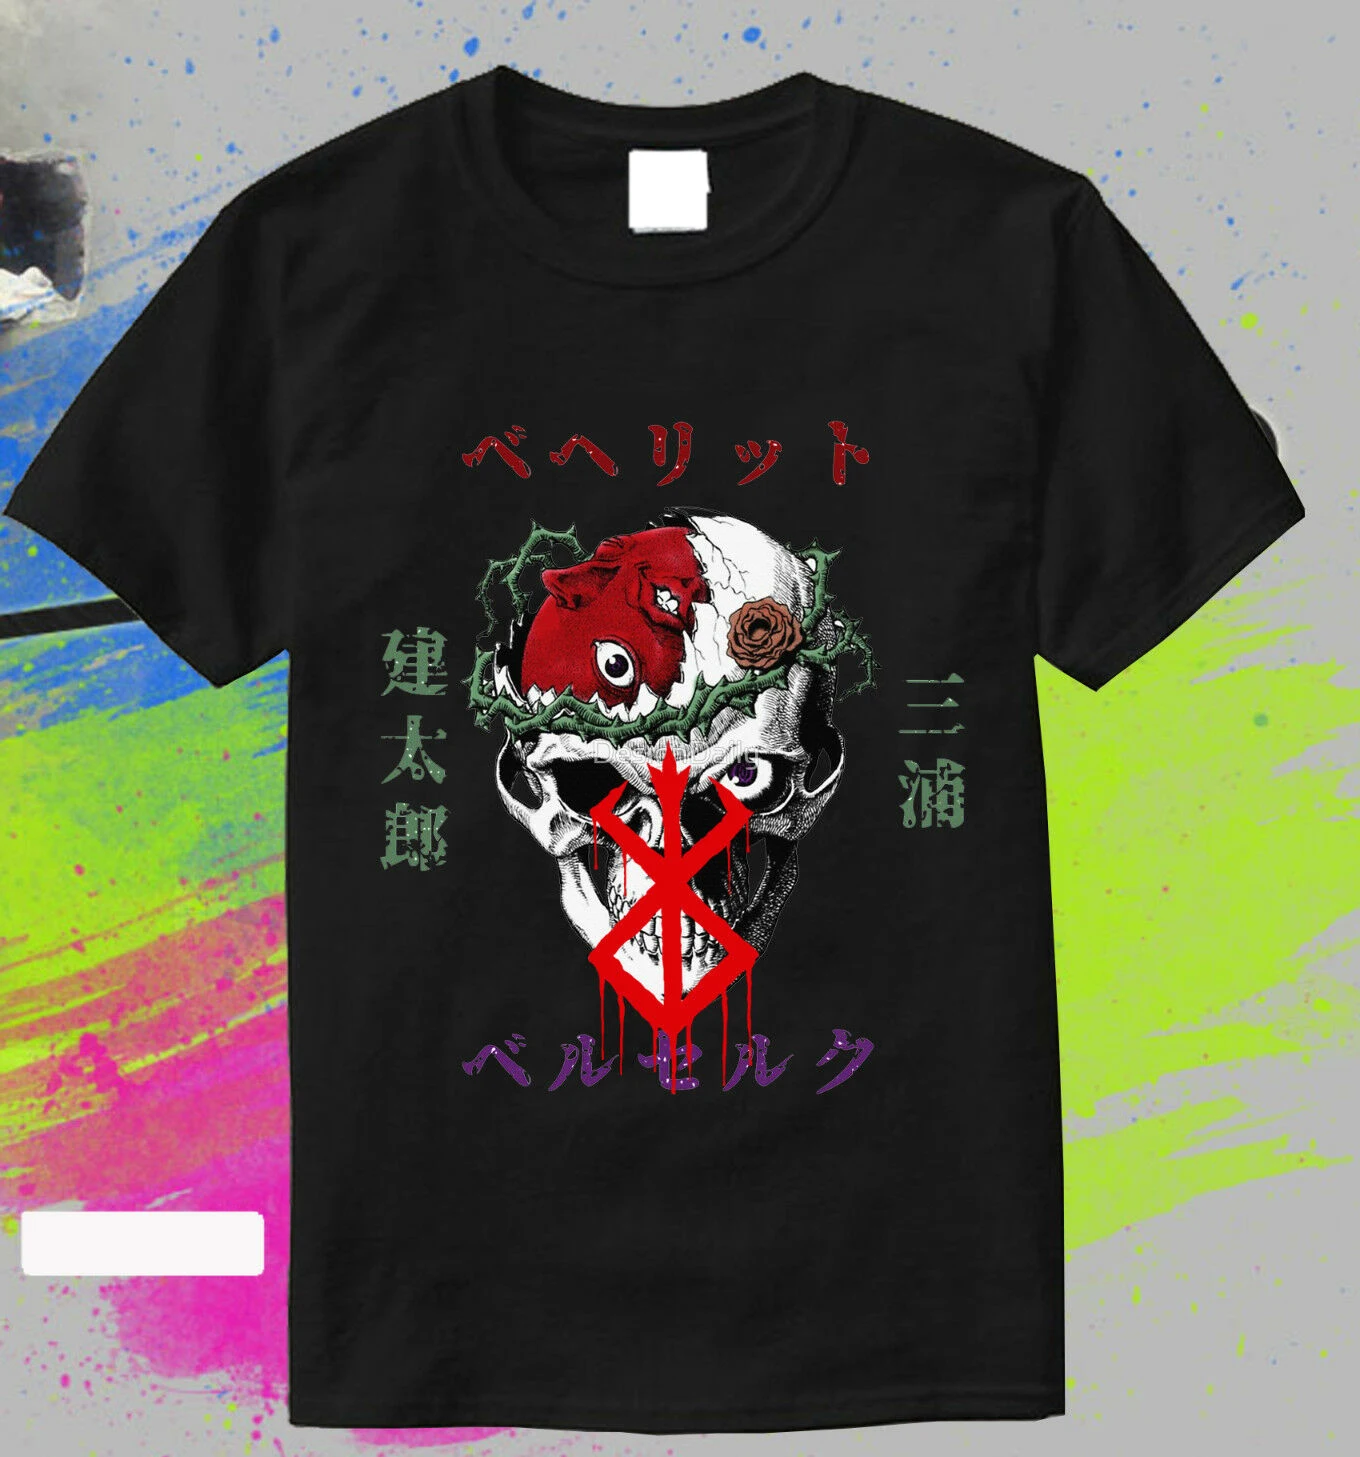 

Berserk Skull Anime Guts Manga Japan Band Of The Beherit T-Shirt Black Top Quality T Shirts Men 2019 Unisex Tee